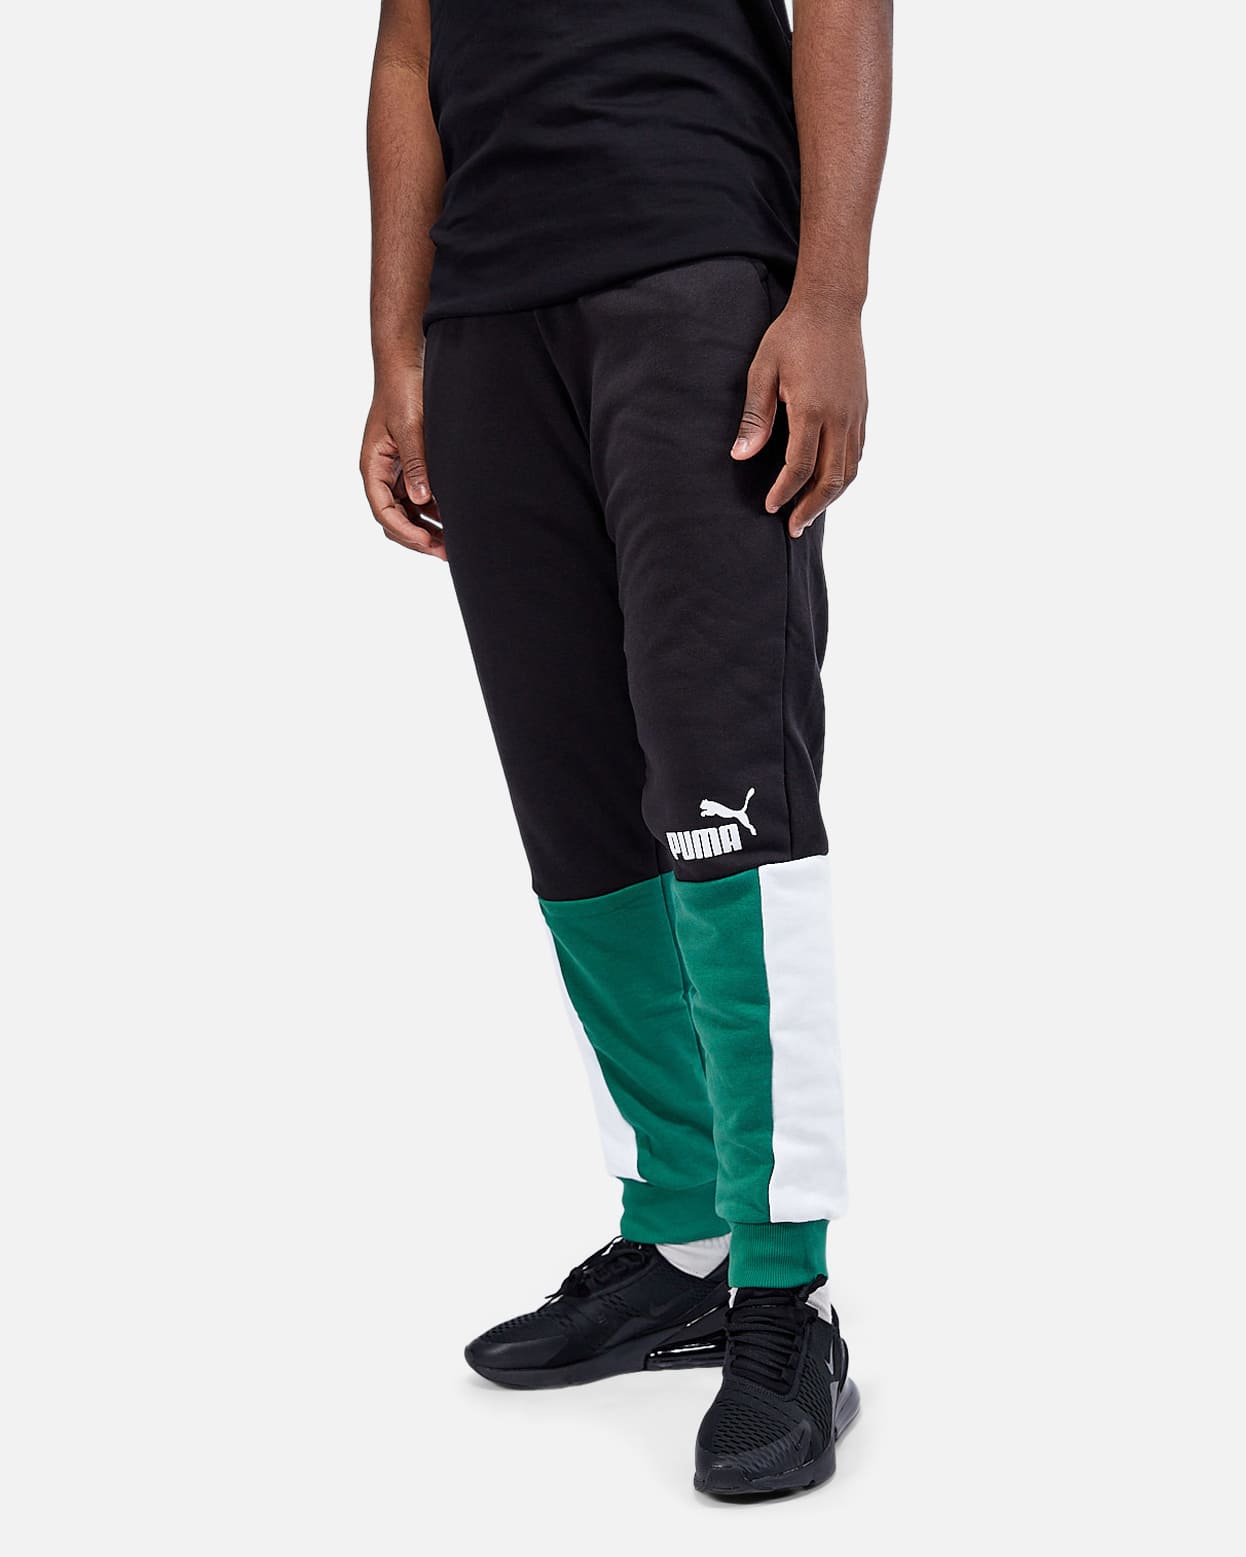 Pantalones Puma Power - Negro/Blanco/Verde